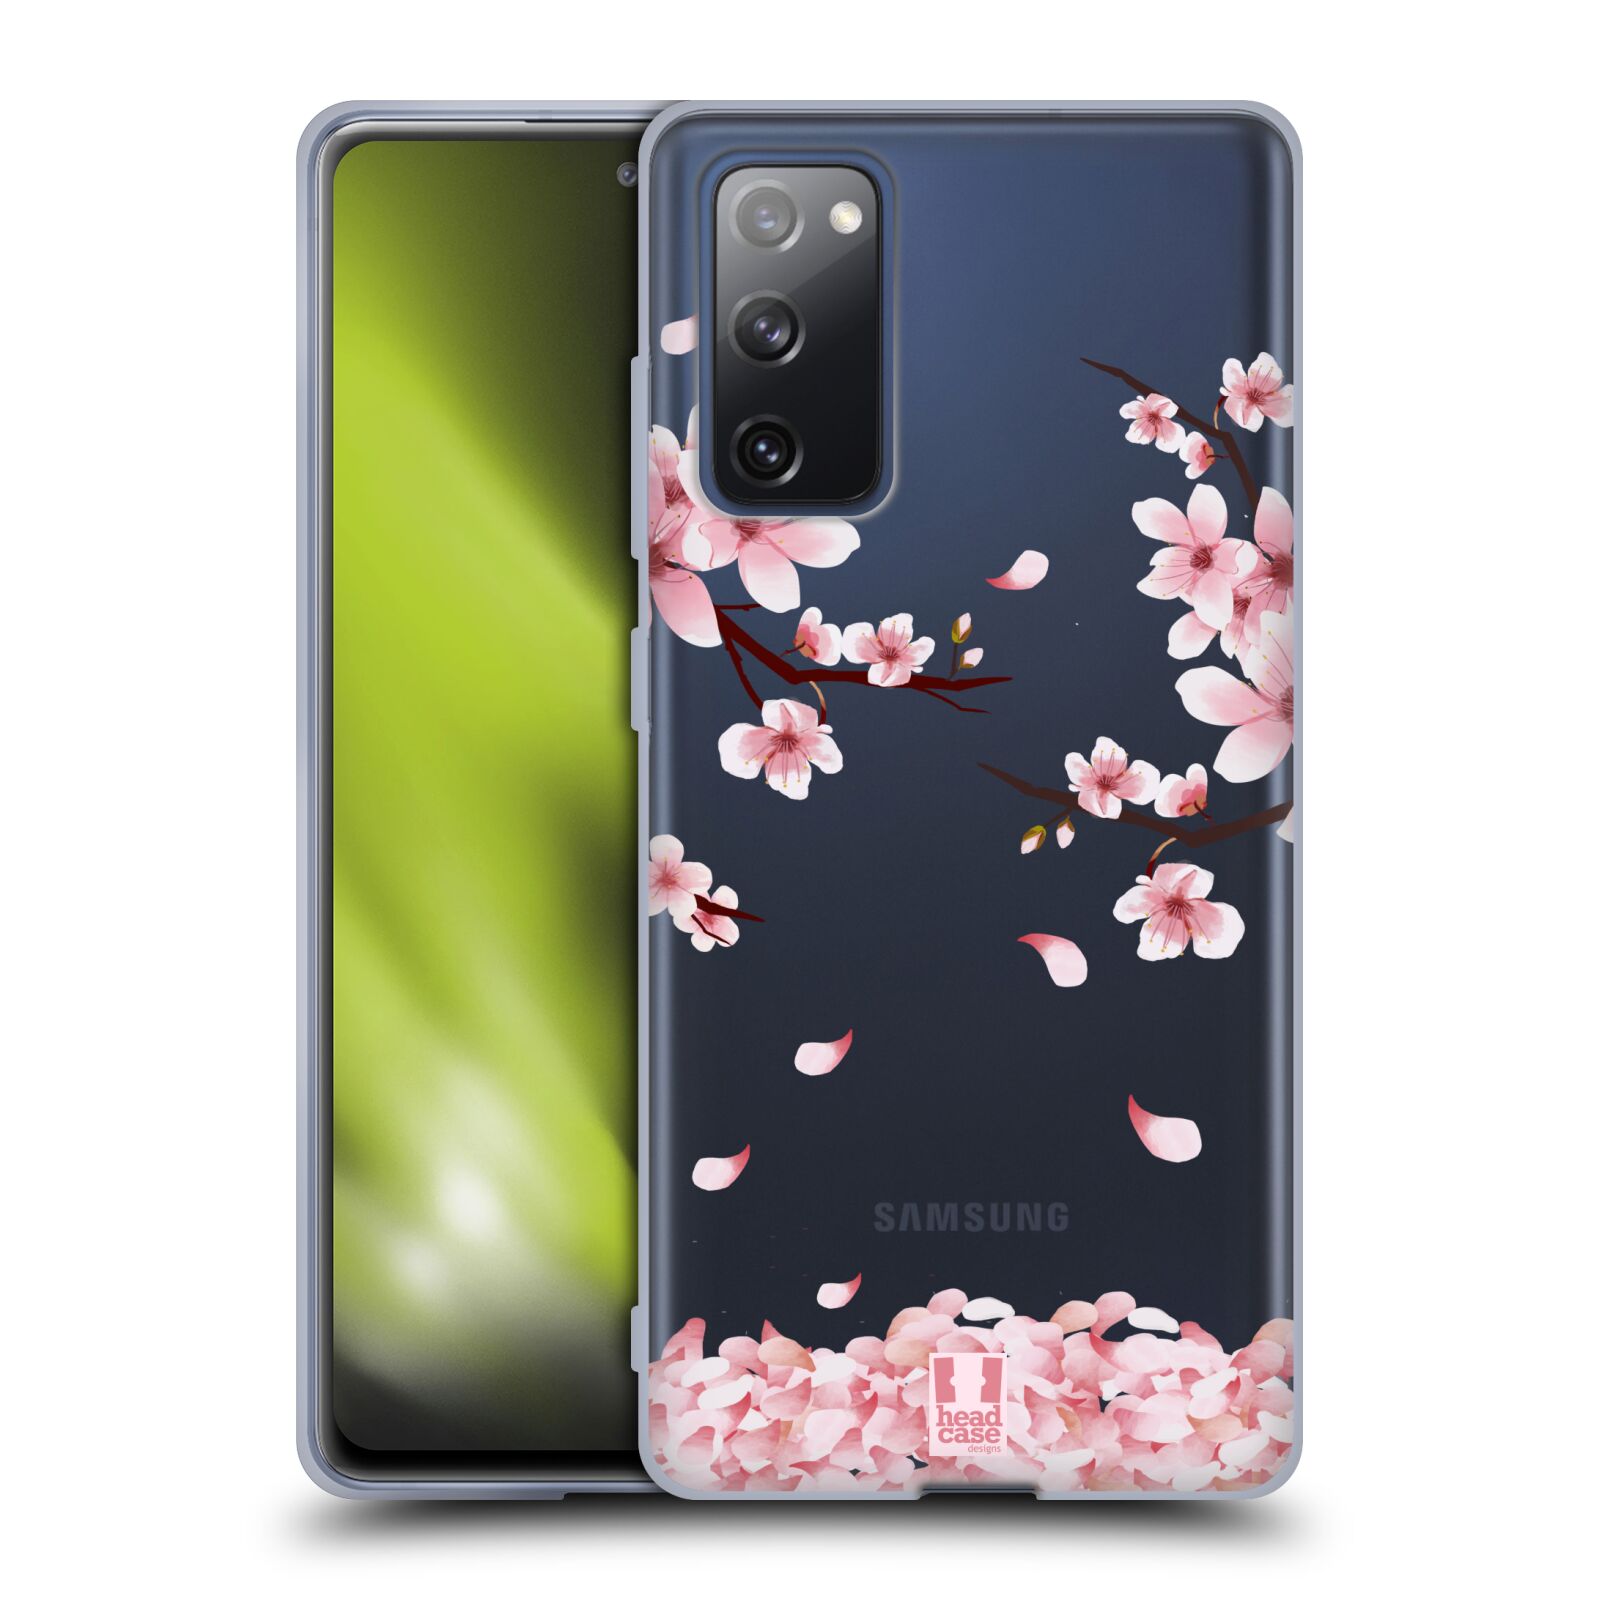 Silikonové pouzdro na mobil Samsung Galaxy S20 FE - Head Case - Květy a větvičky (Silikonový kryt, obal, pouzdro na mobilní telefon Samsung Galaxy S20 FE s motivem Květy a větvičky)